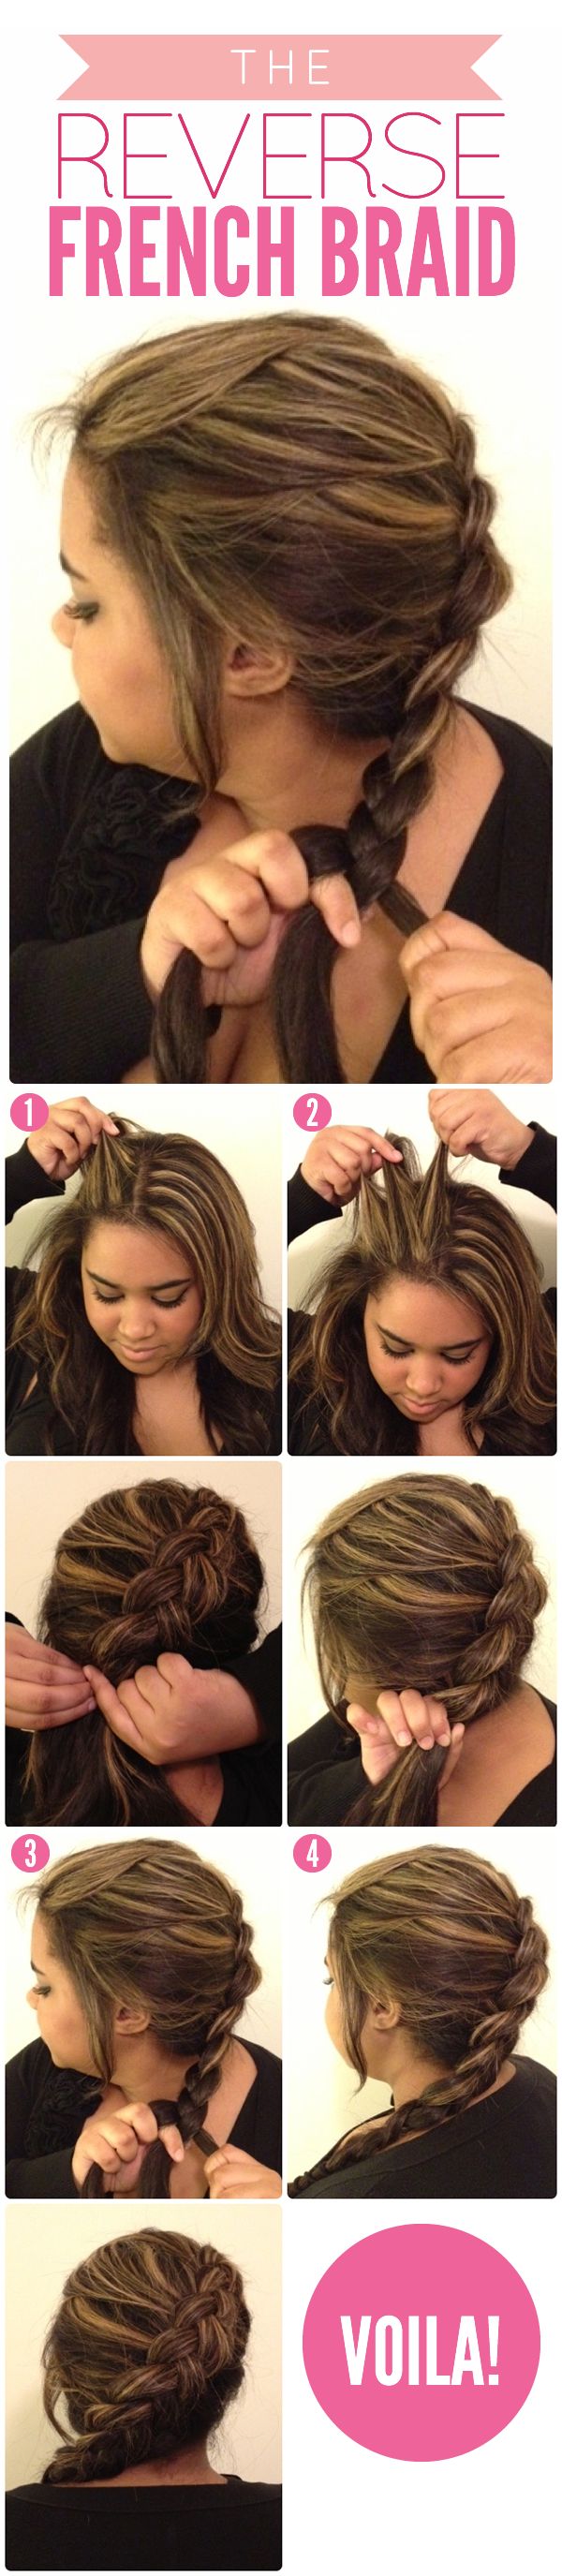 pretty hairstyles: french braid tutorials - pretty designs